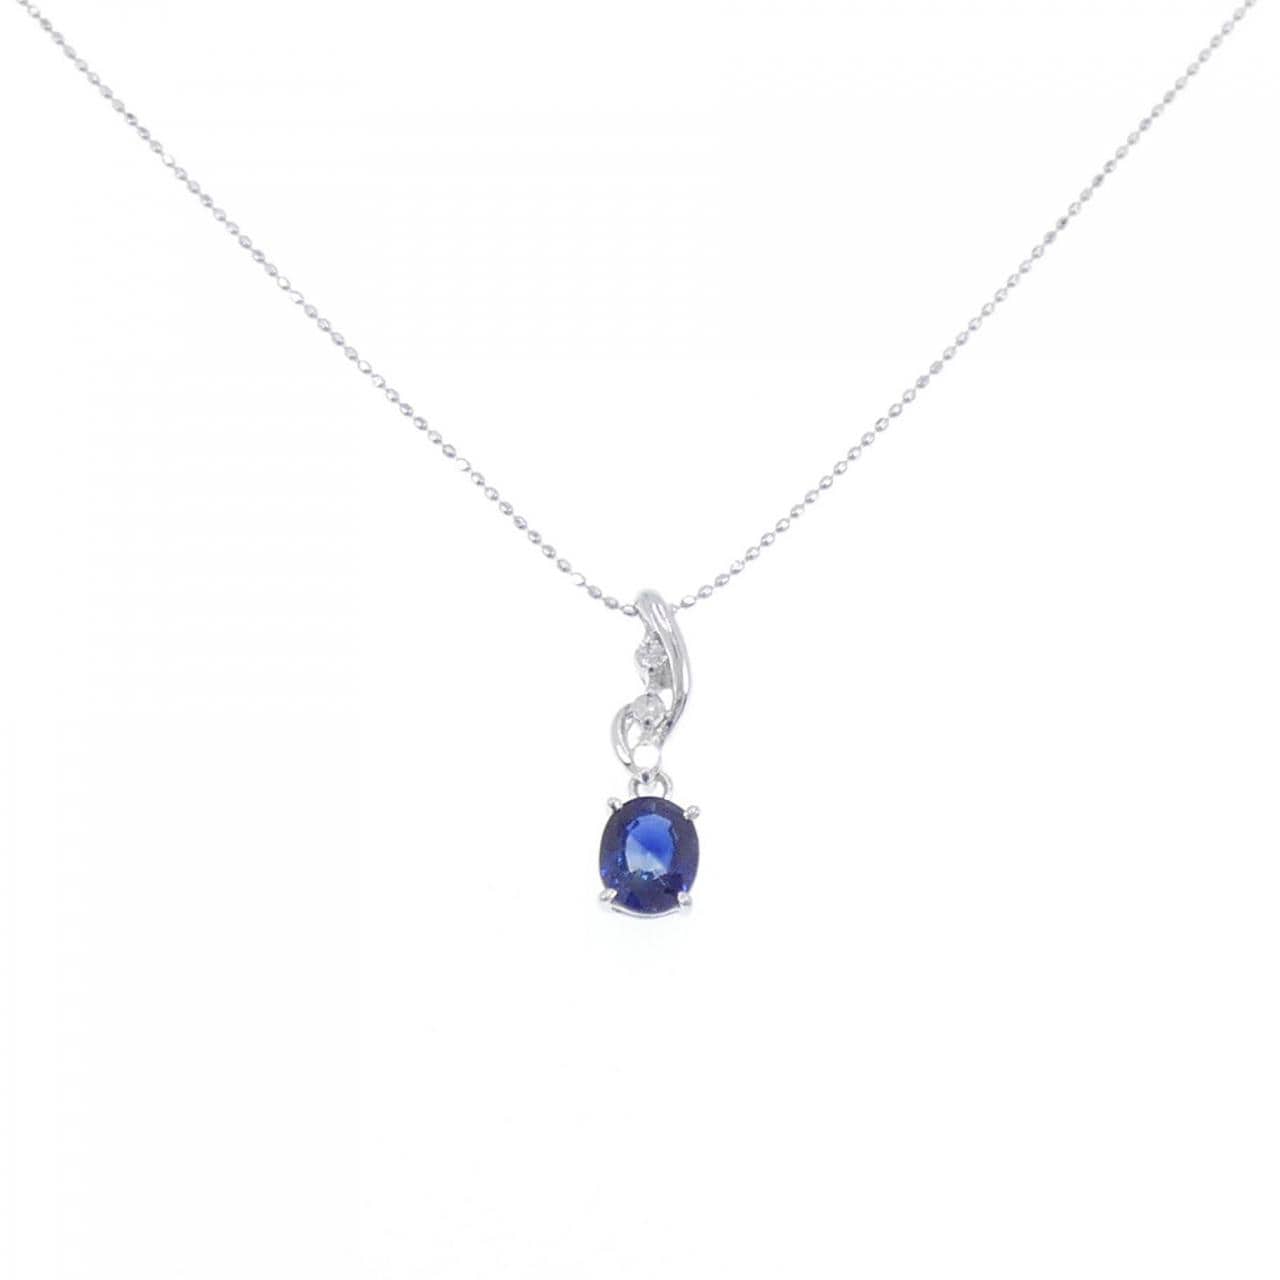 K18WG sapphire necklace 0.95CT